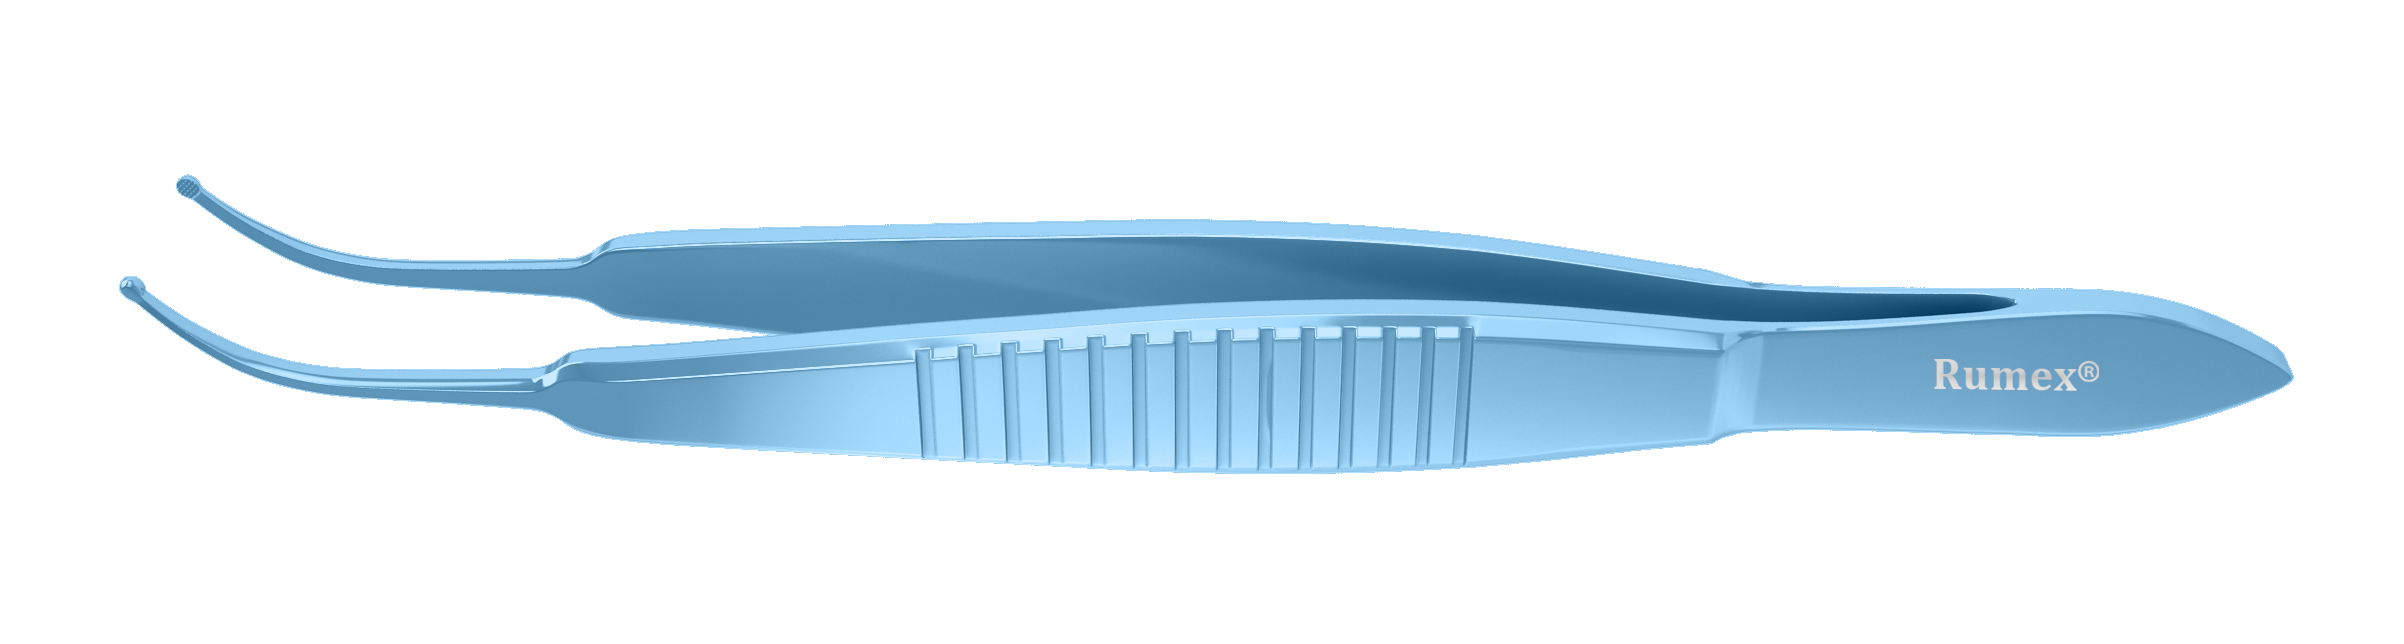 289R 4-2206T LASIK Flap Forceps, Curved, Length 108 mm, Titanium